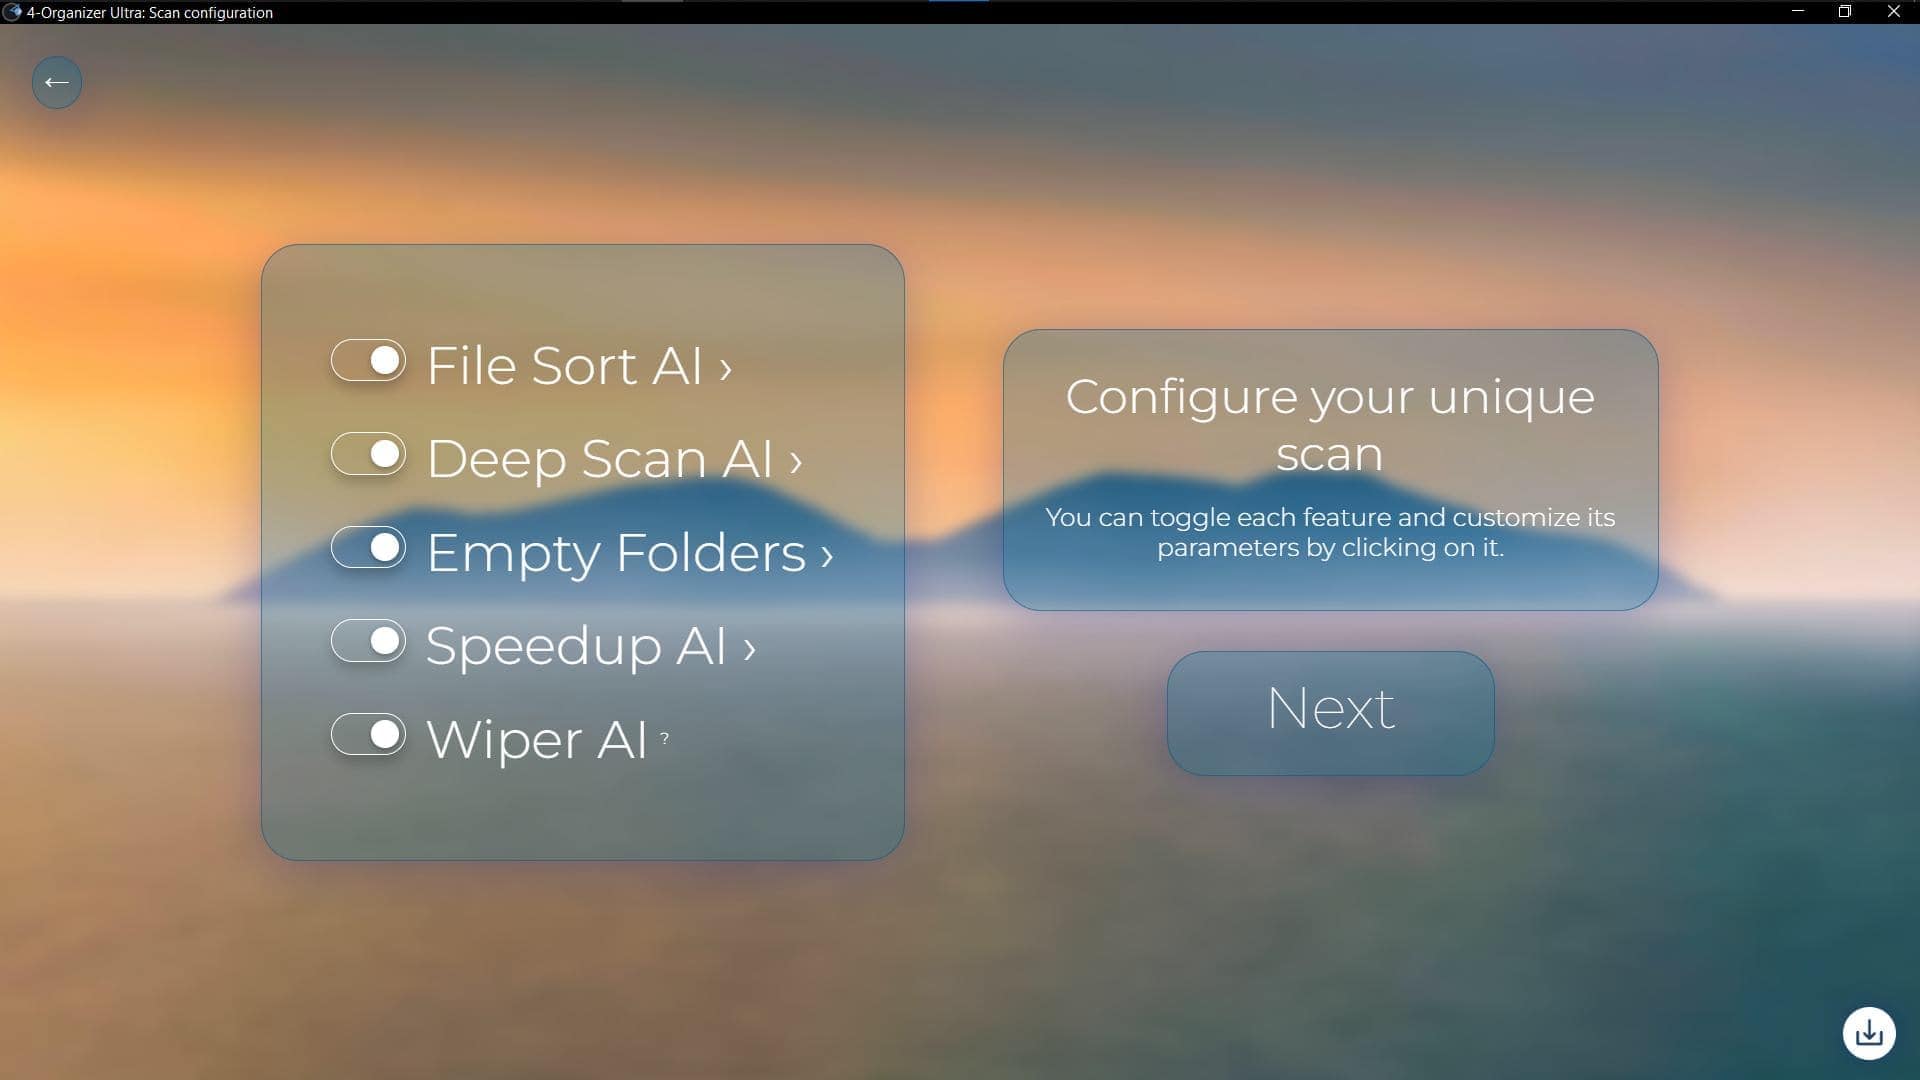 Screenshot of 'Scan configuration' window of 4-Organizer Ultra